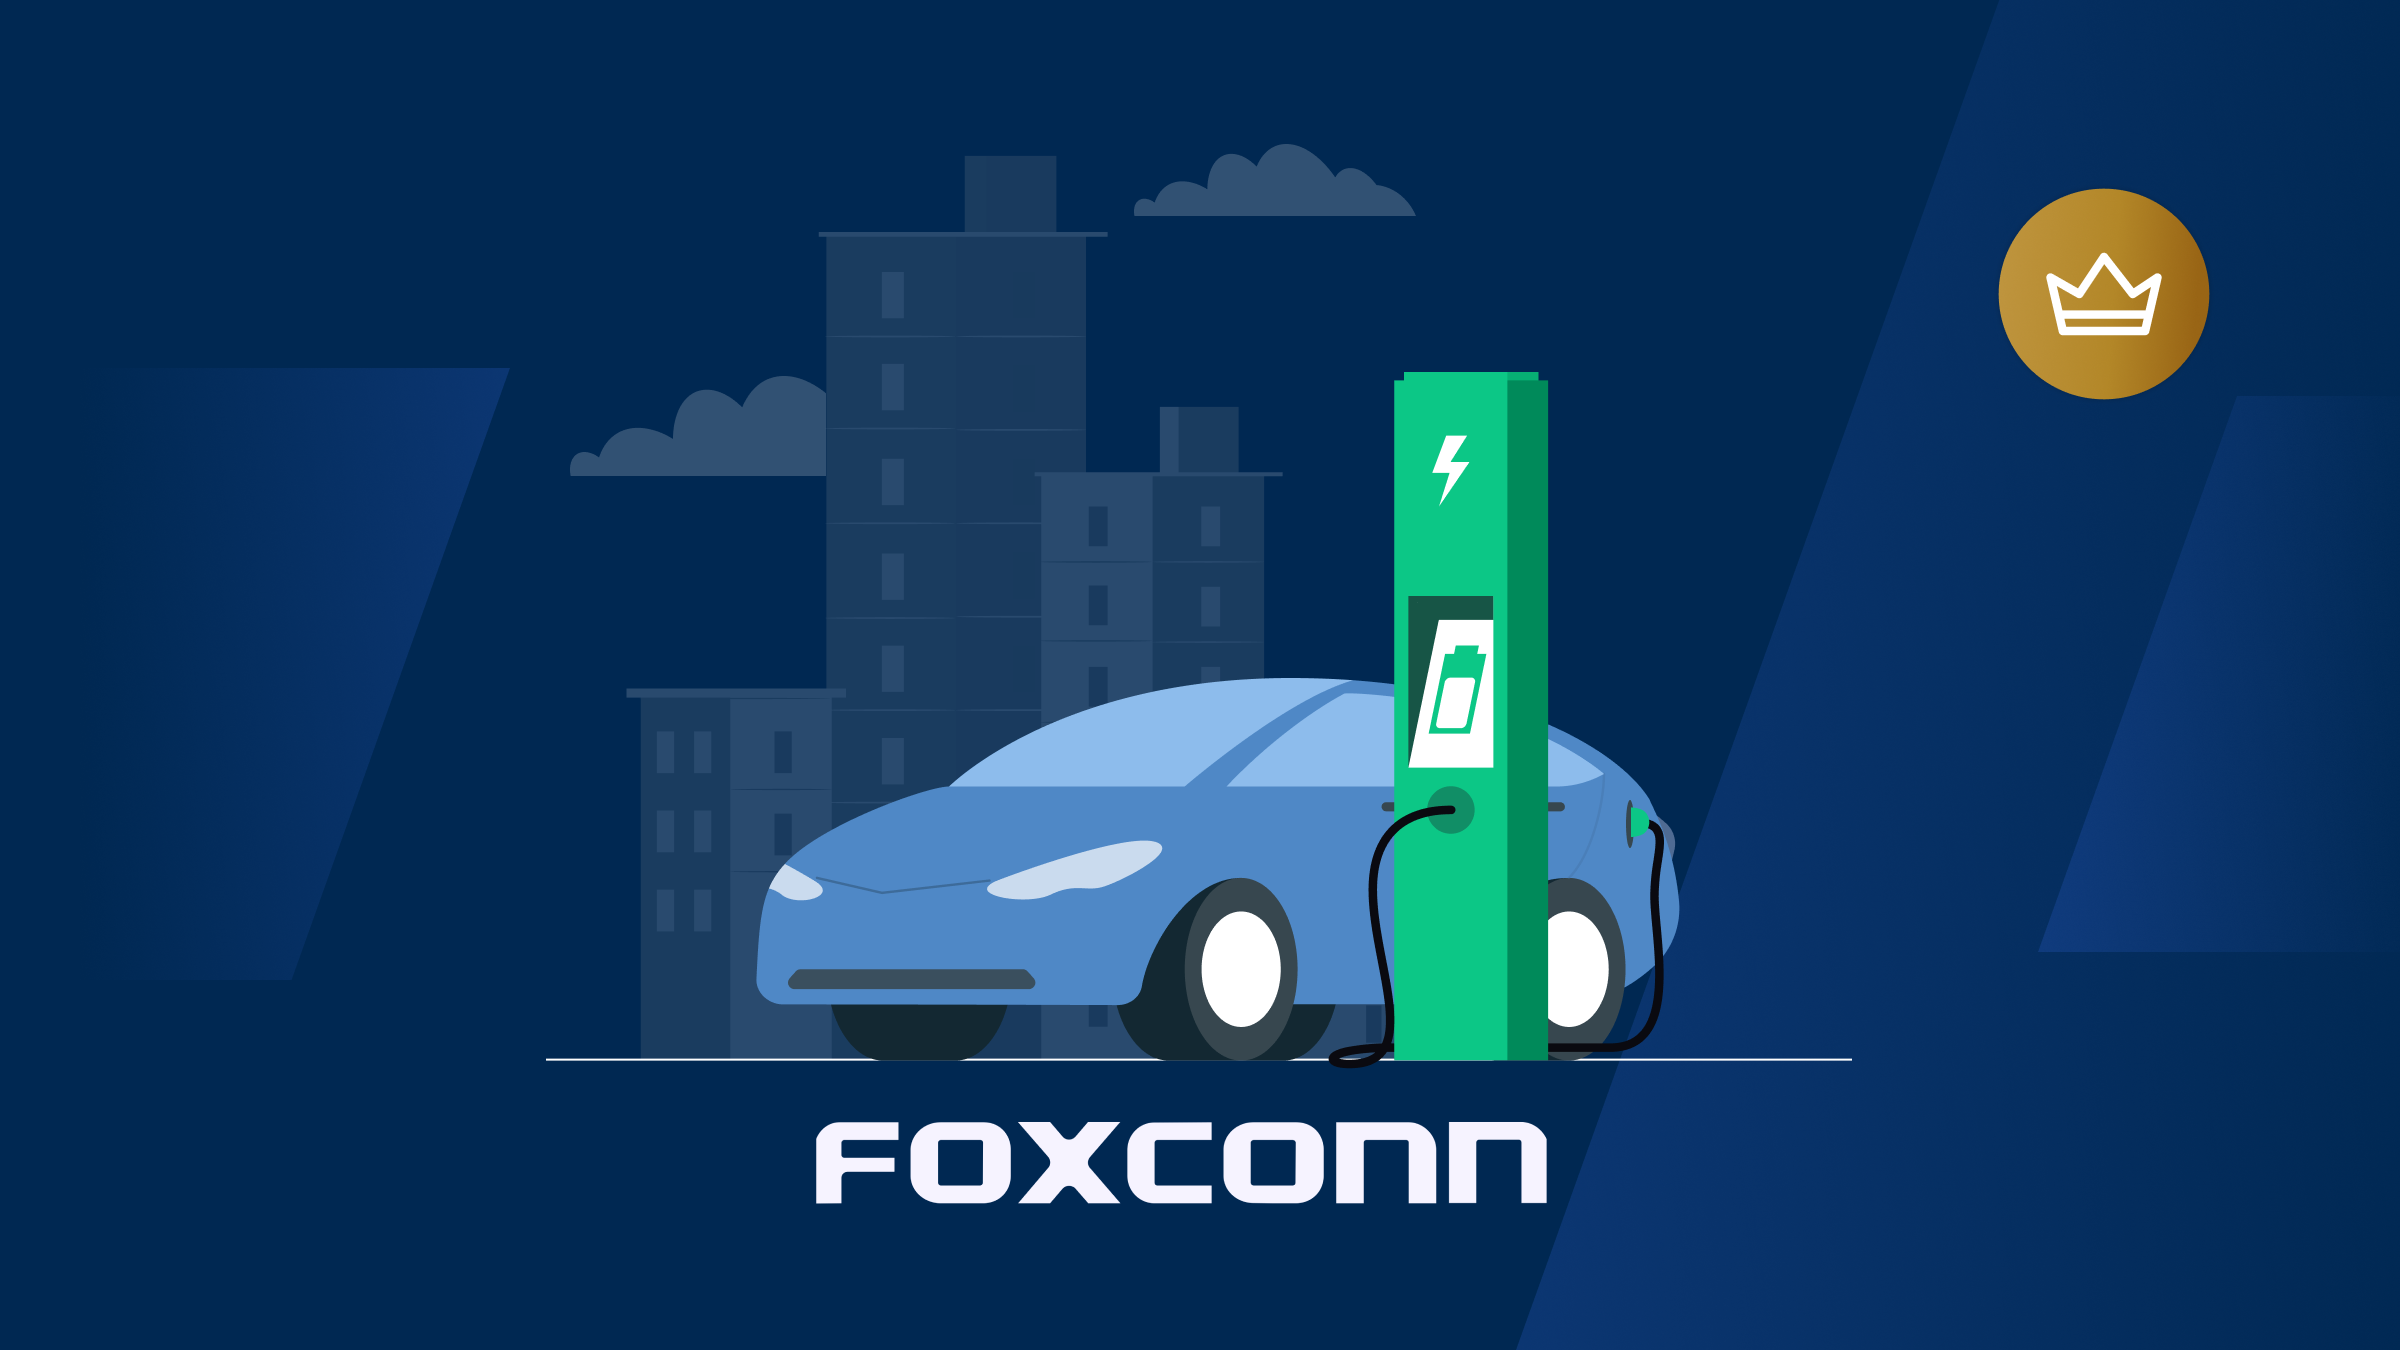 Foxconn’s progress towards EV dominance